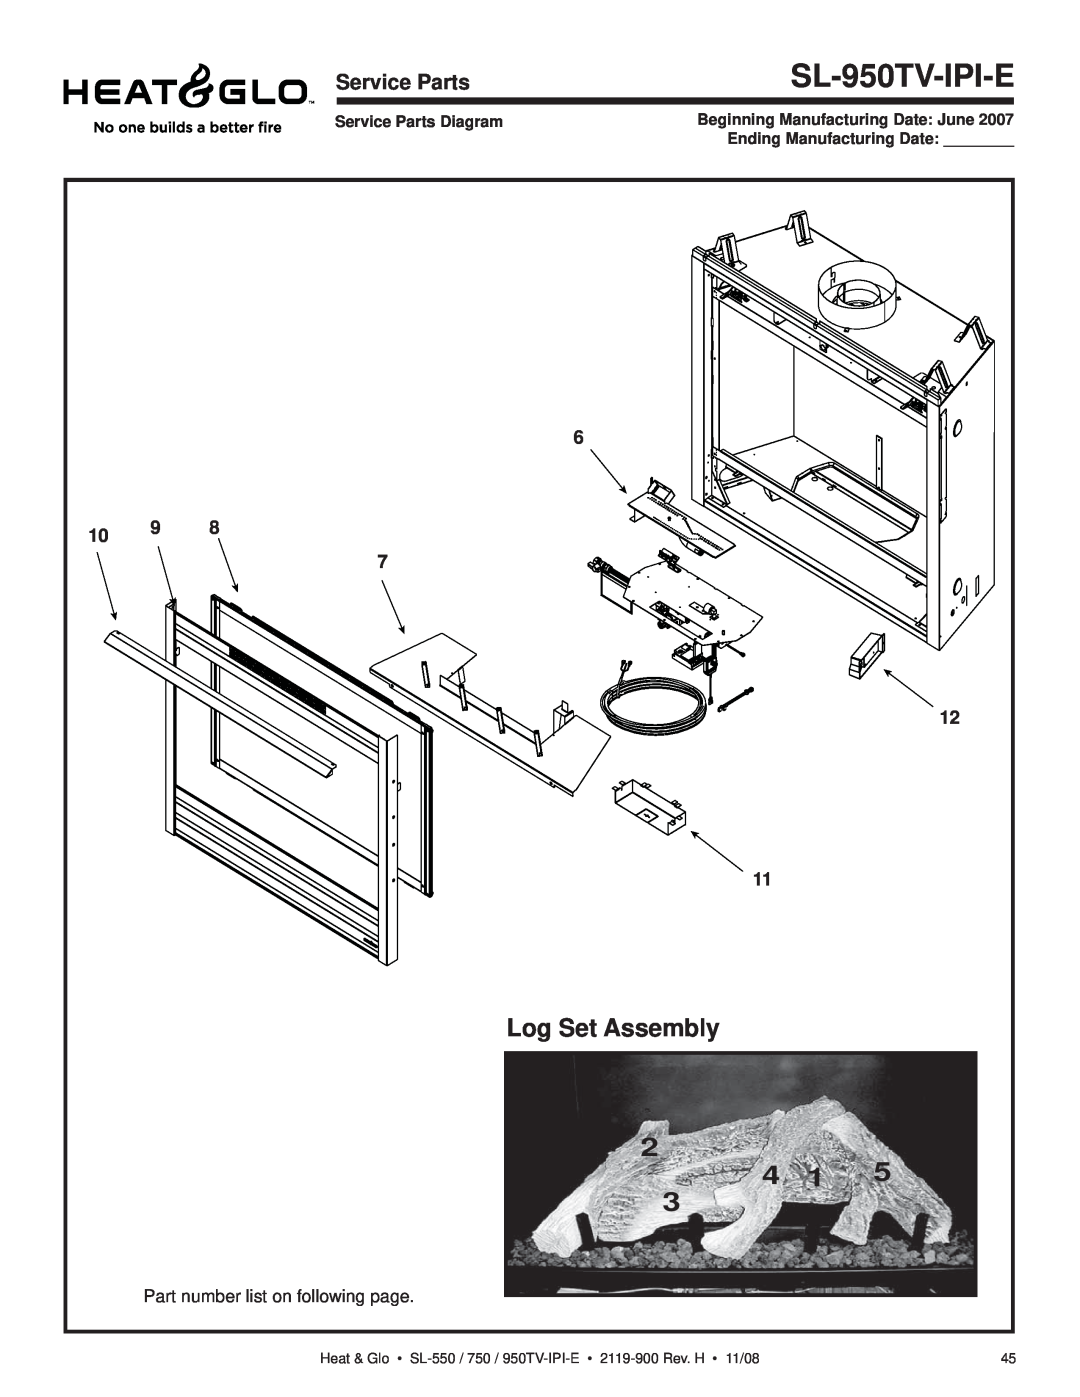 Hearth and Home Technologies SL-750TV-IPI-E owner manual SL-950TV-IPI-E, Log Set Assembly, 10 9, Service Parts Diagram 